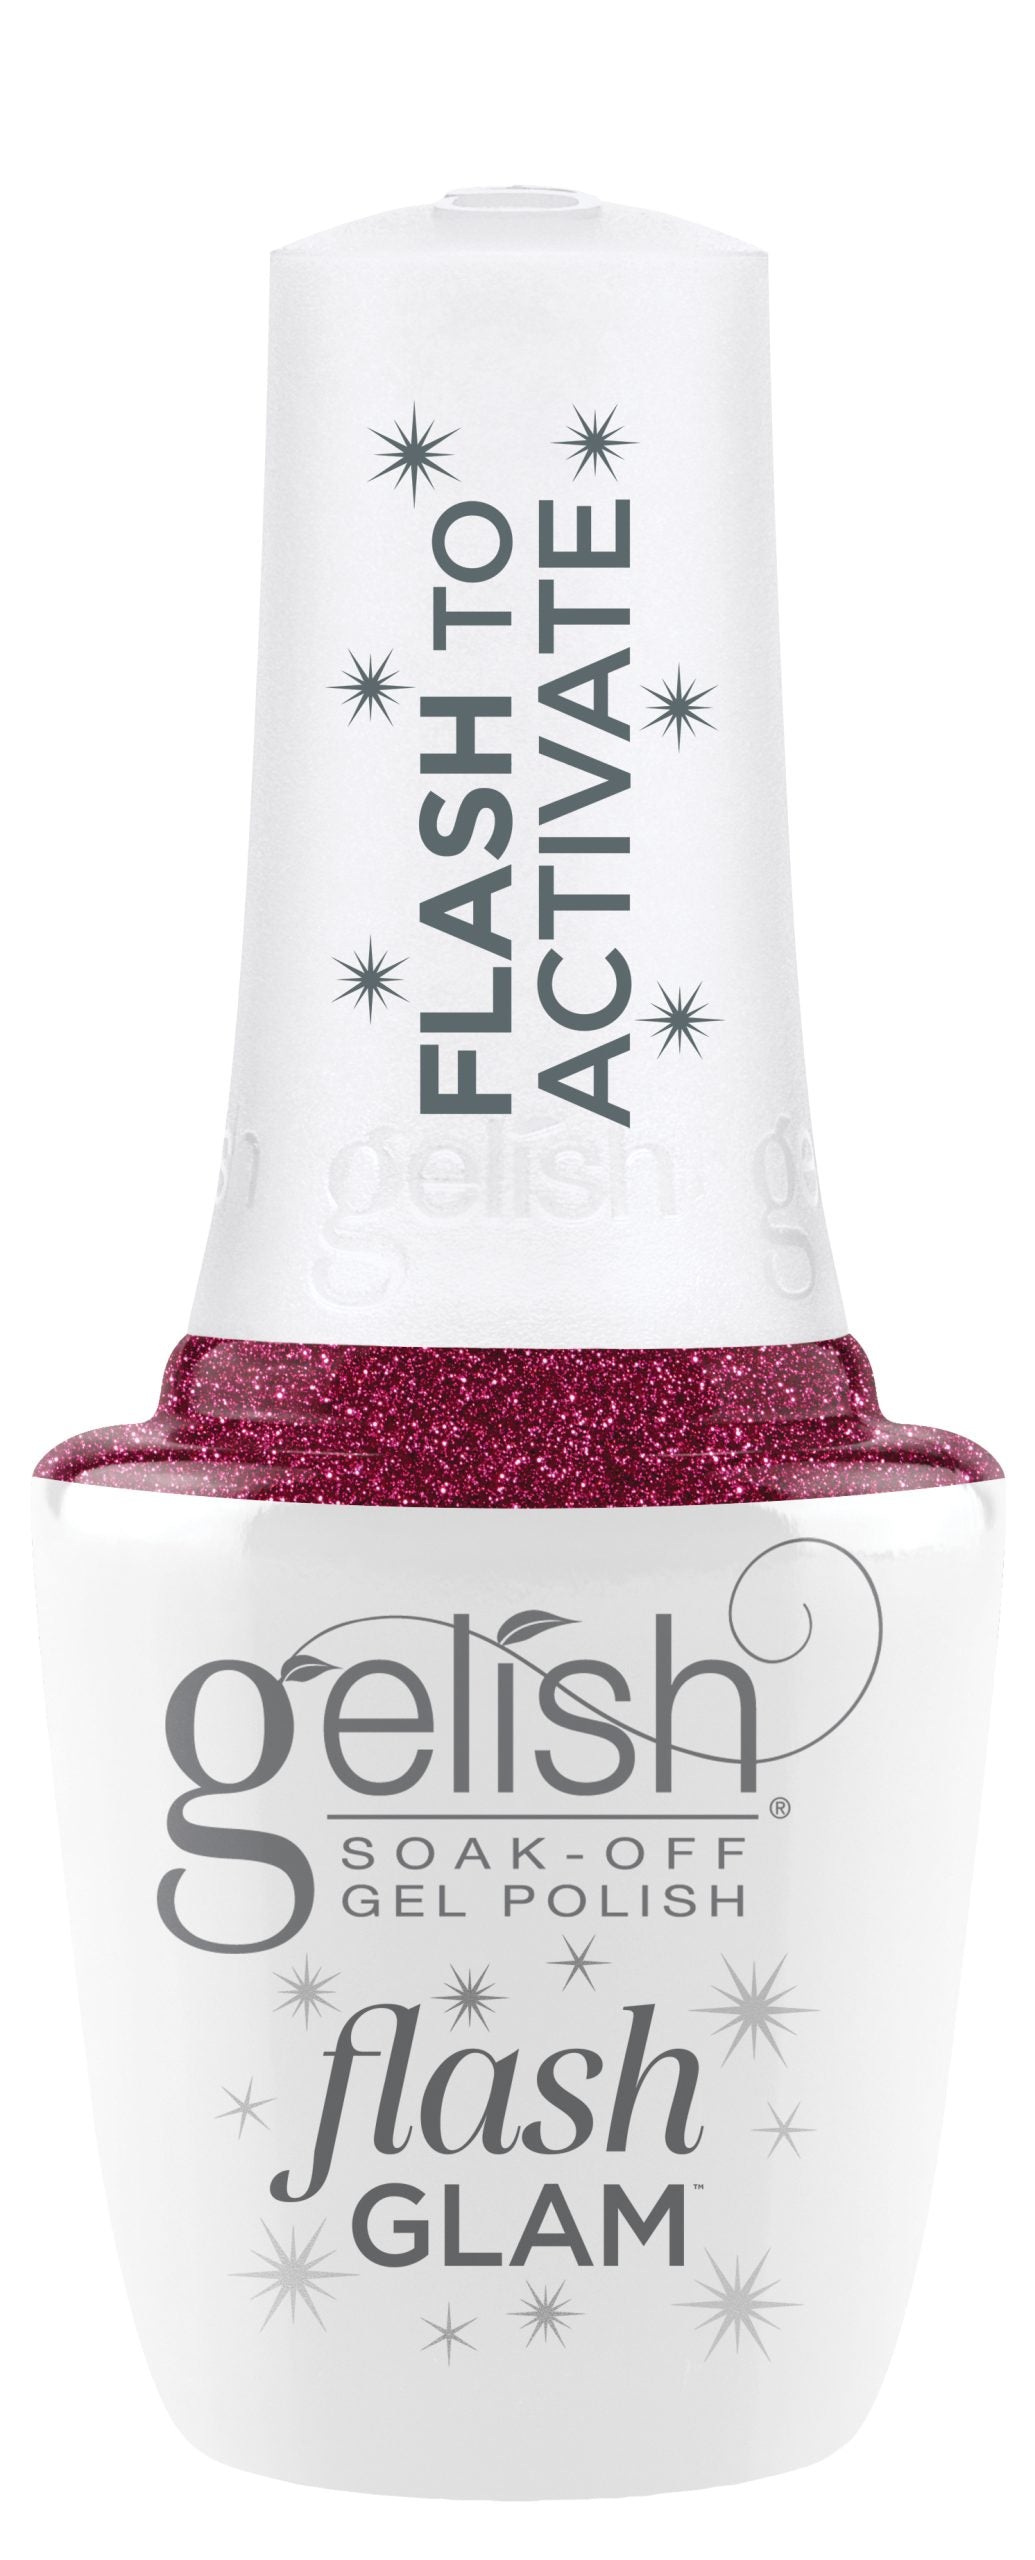 Gelish Pro - Flash Glam - Mesmerized By You - 15ml